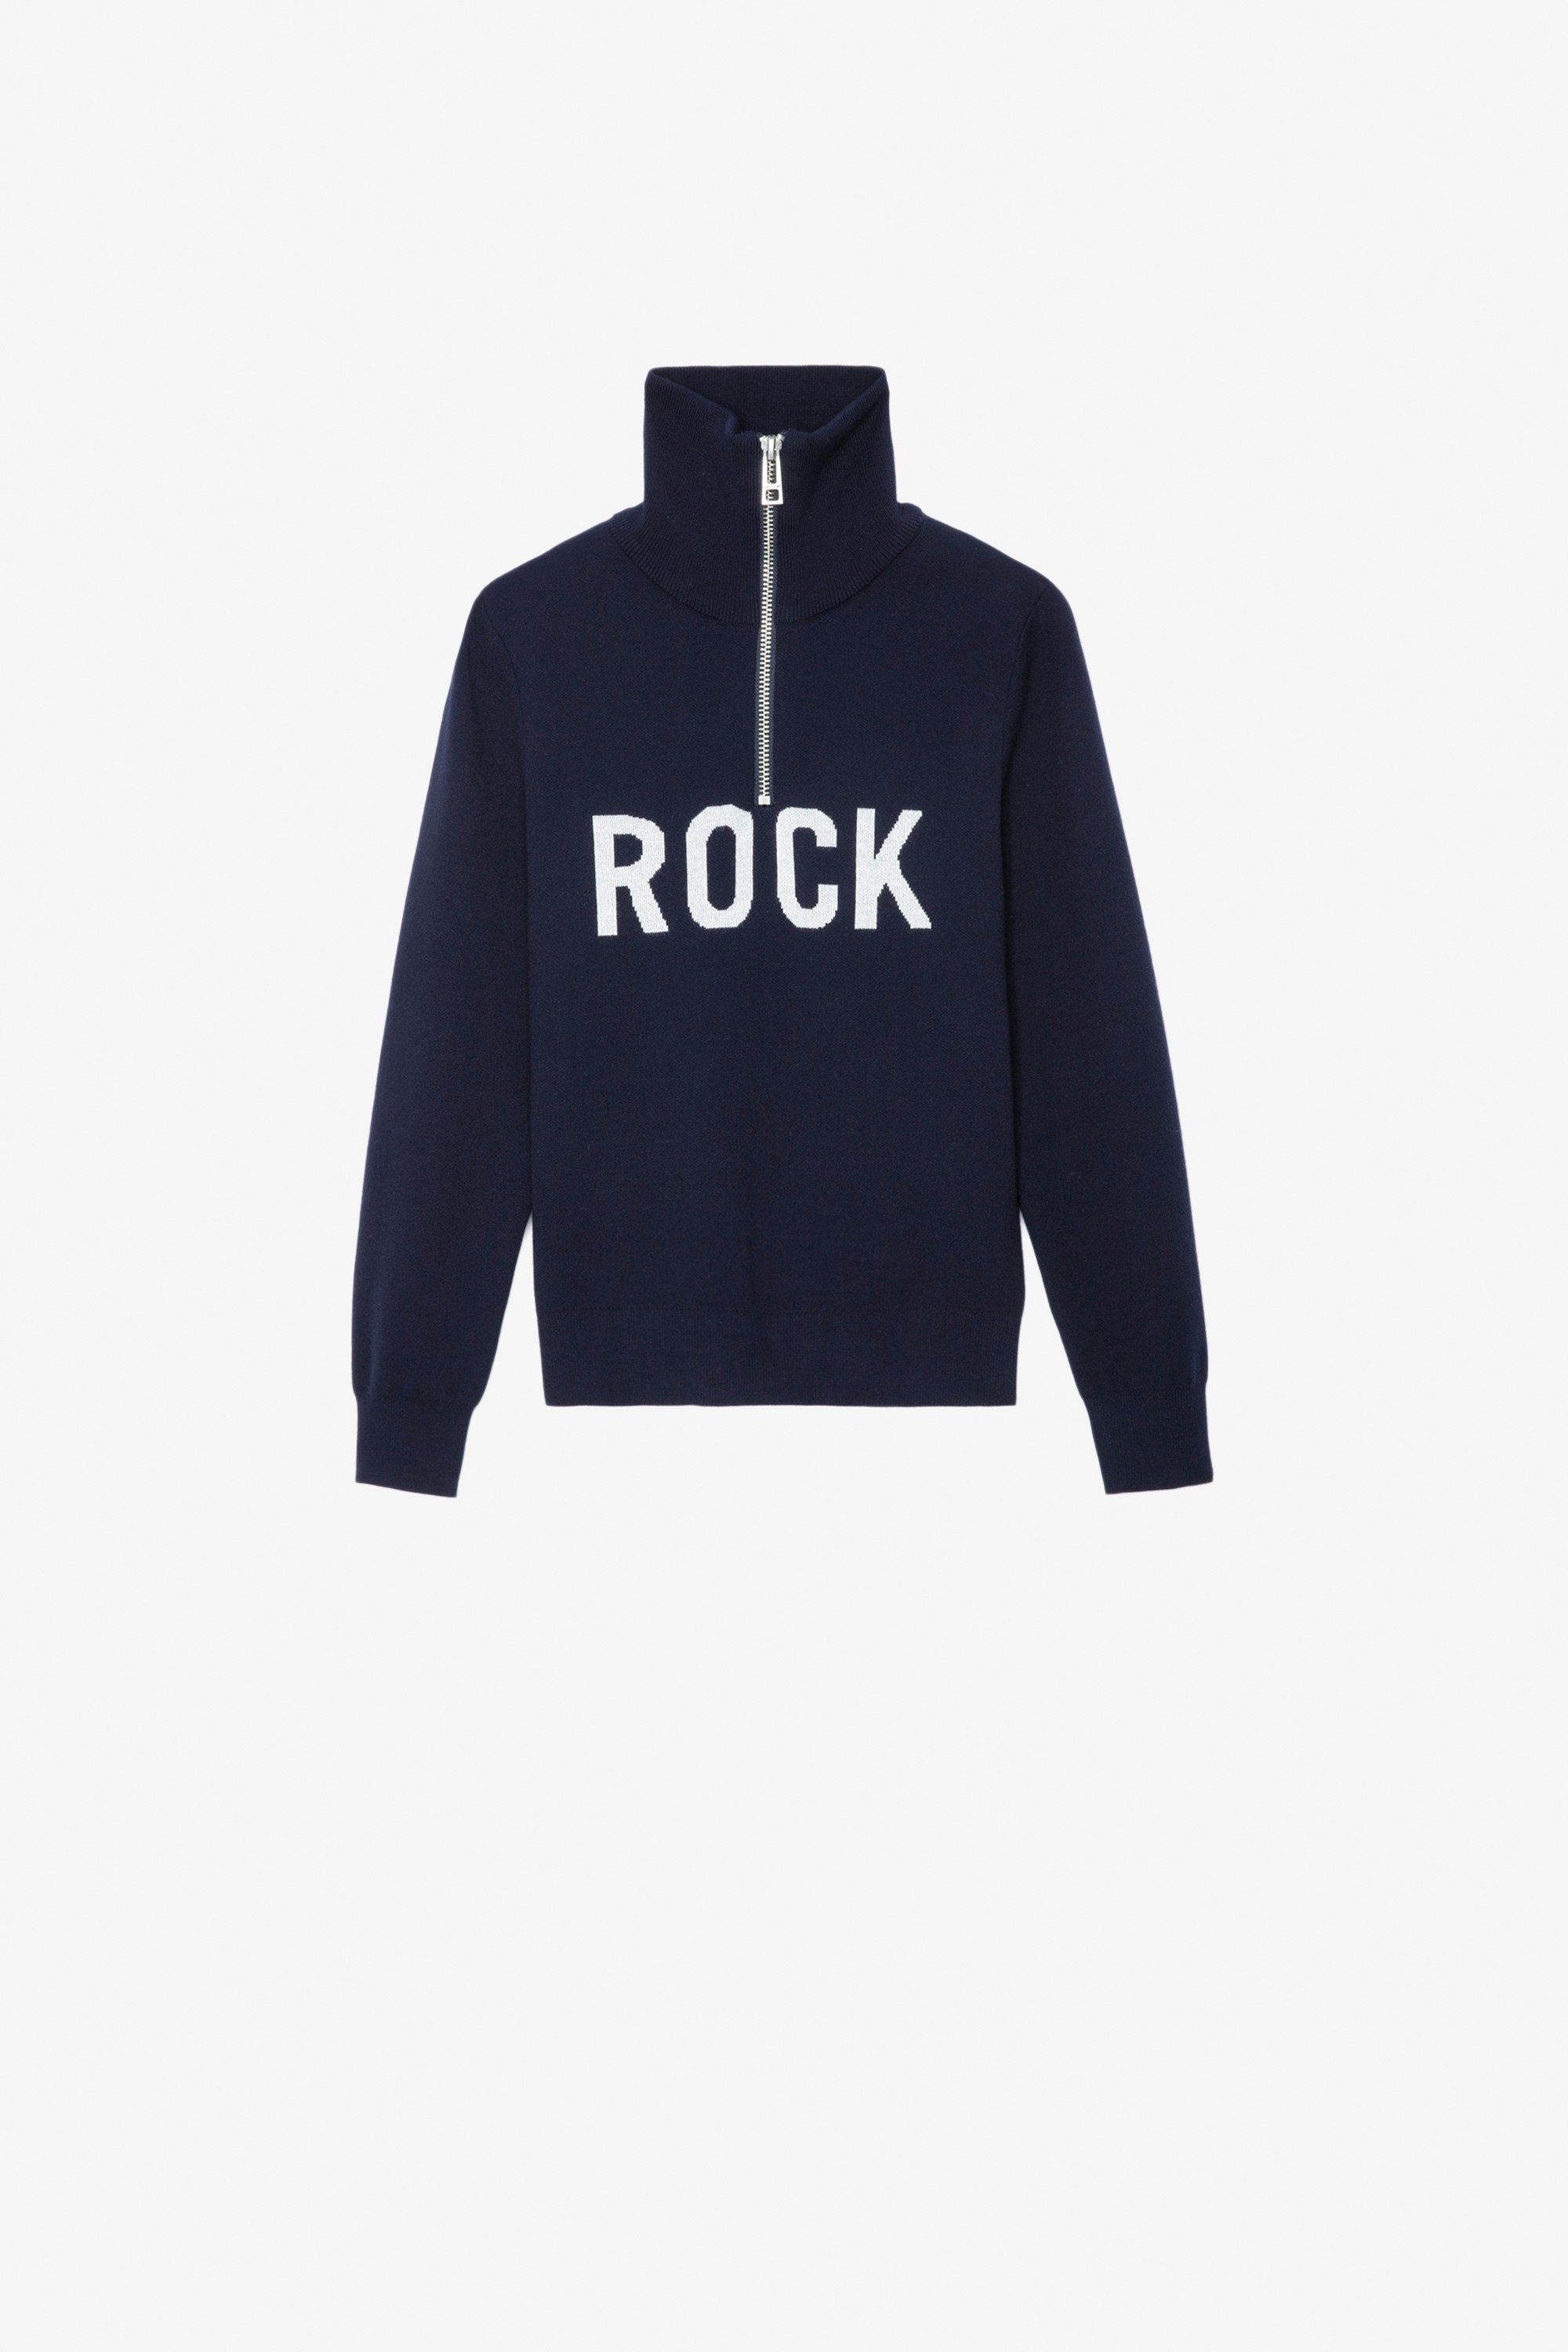 Tim Boys’ Jumper Boys’ navy blue knit jumper with zip neck and “Rock” slogan.